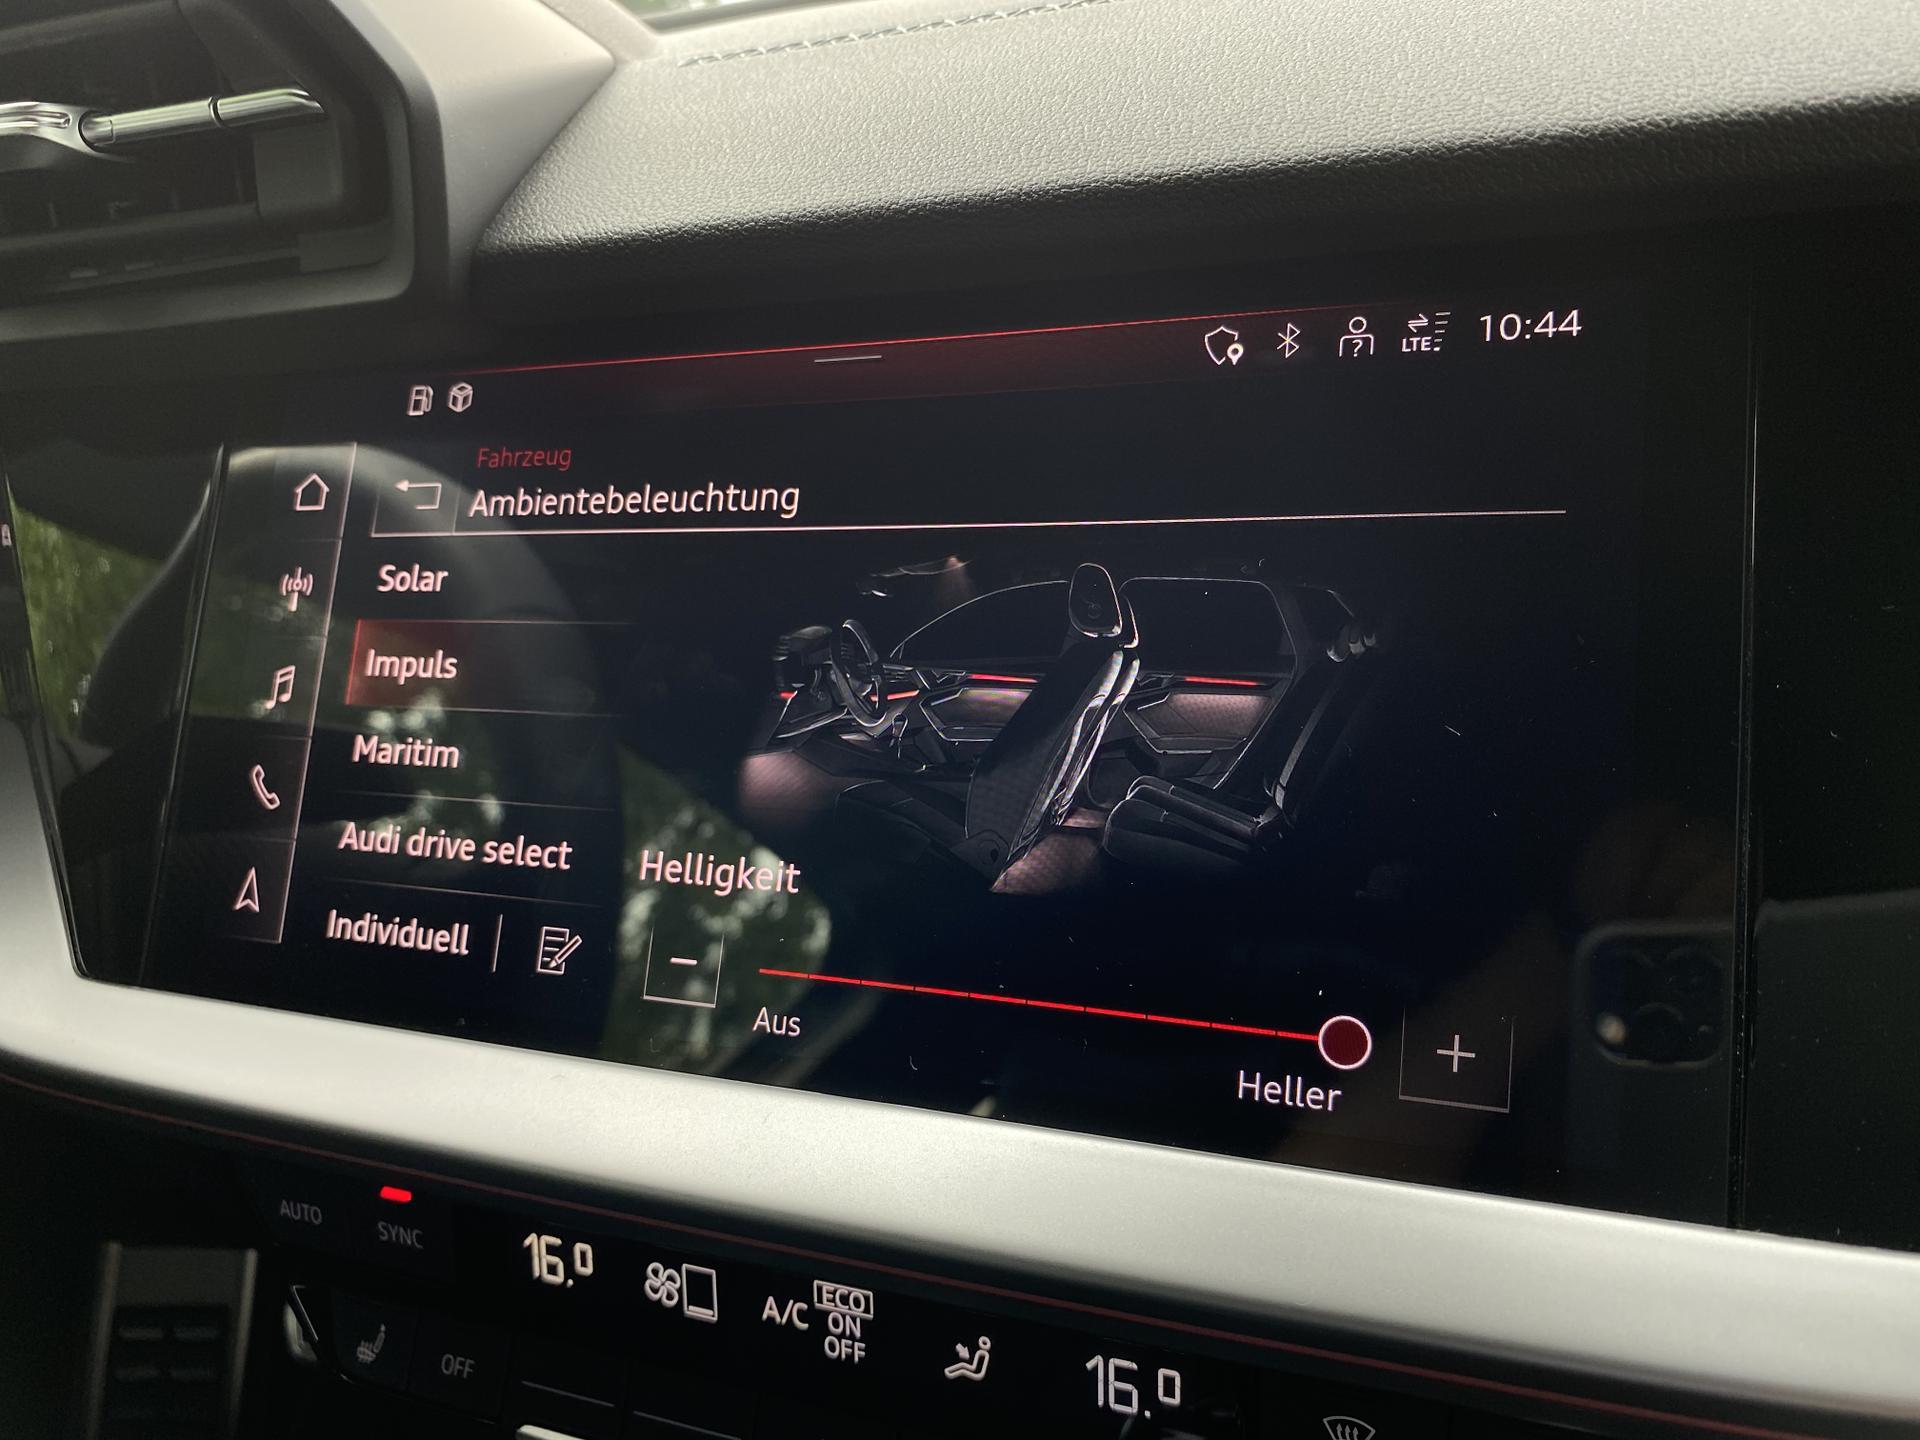 Audi A3 Multimedia